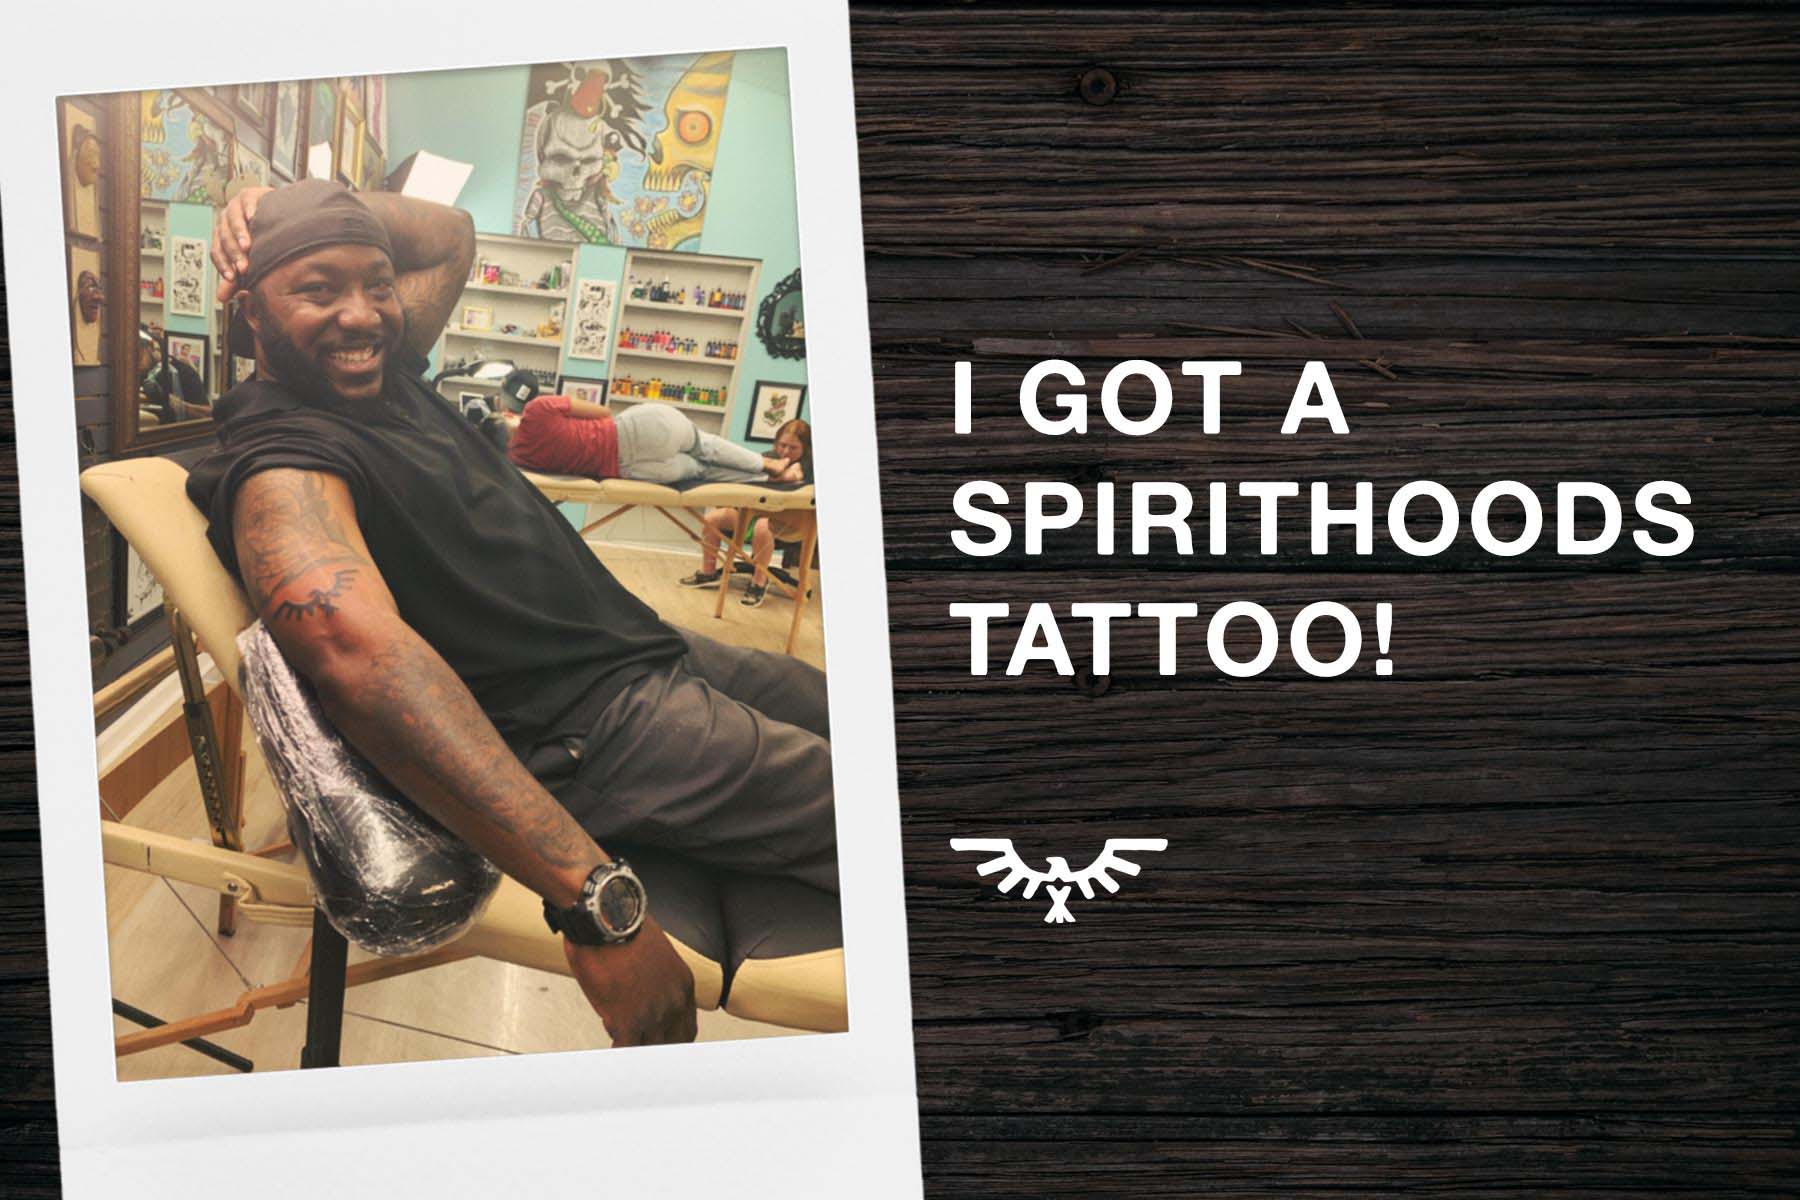 man showing off new spirithoods logo tattoo